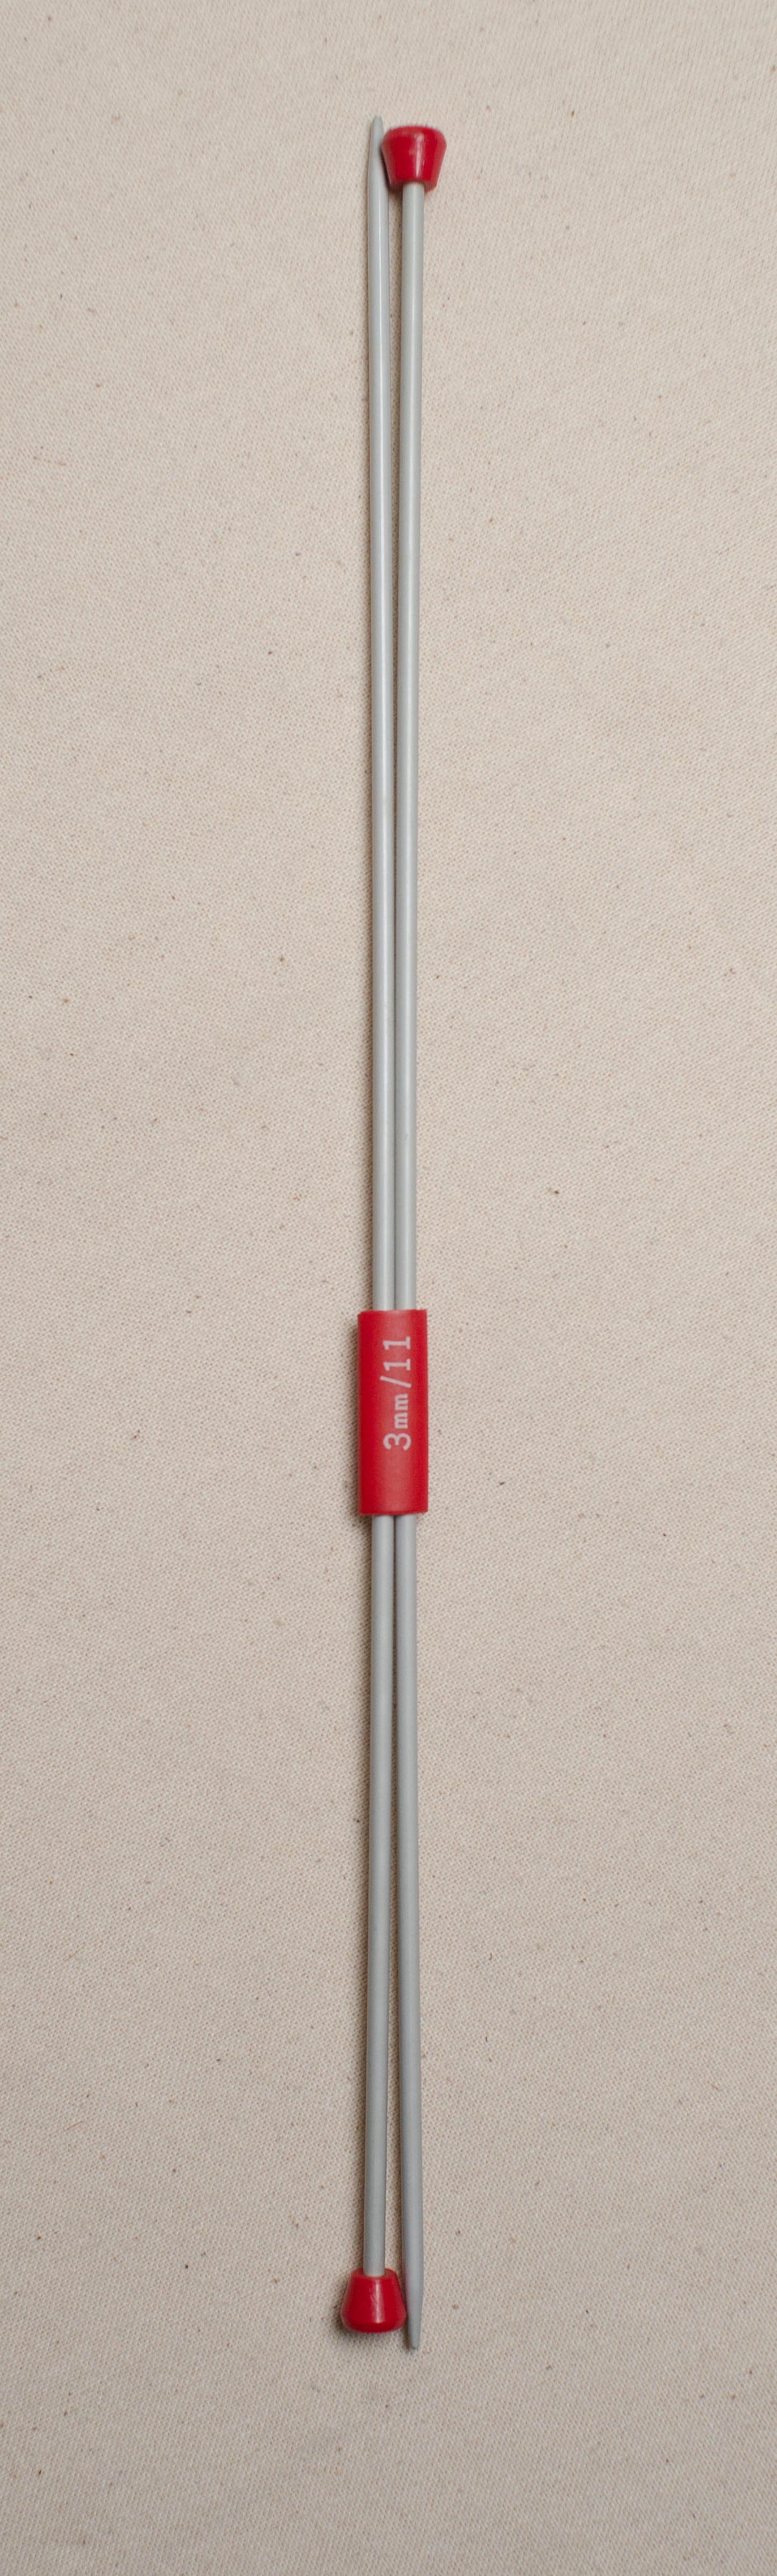 Milward 30cm Knitting Needles - 30cm X 3mm